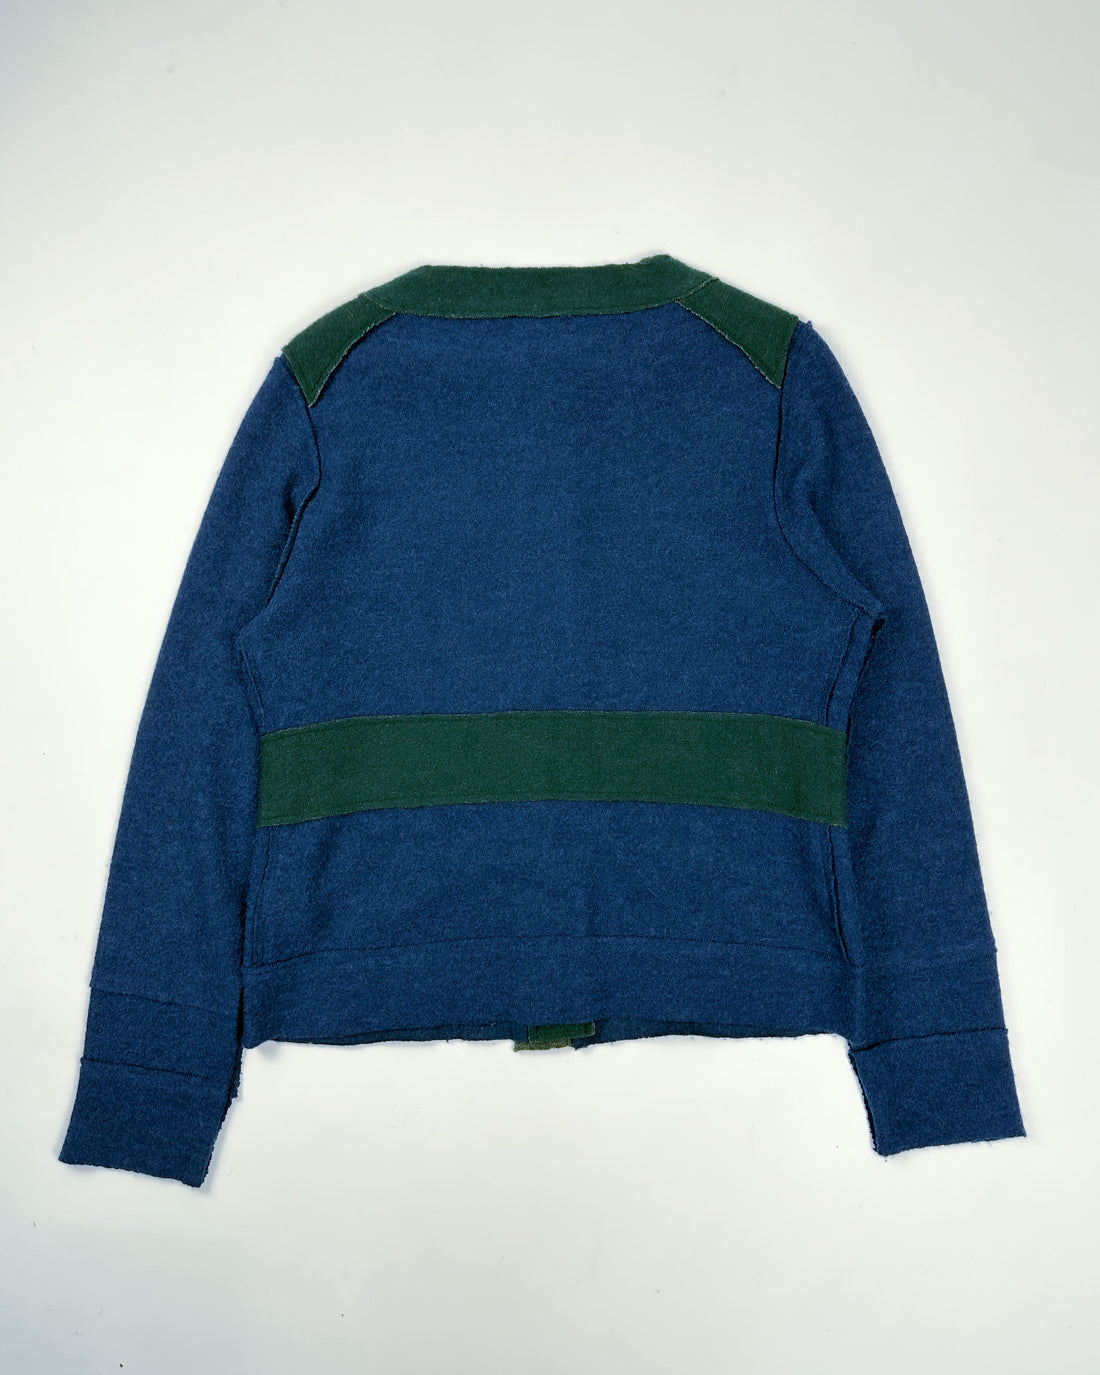 Adolfo Dominguez Blue Green Distressed Cardigan 1990's